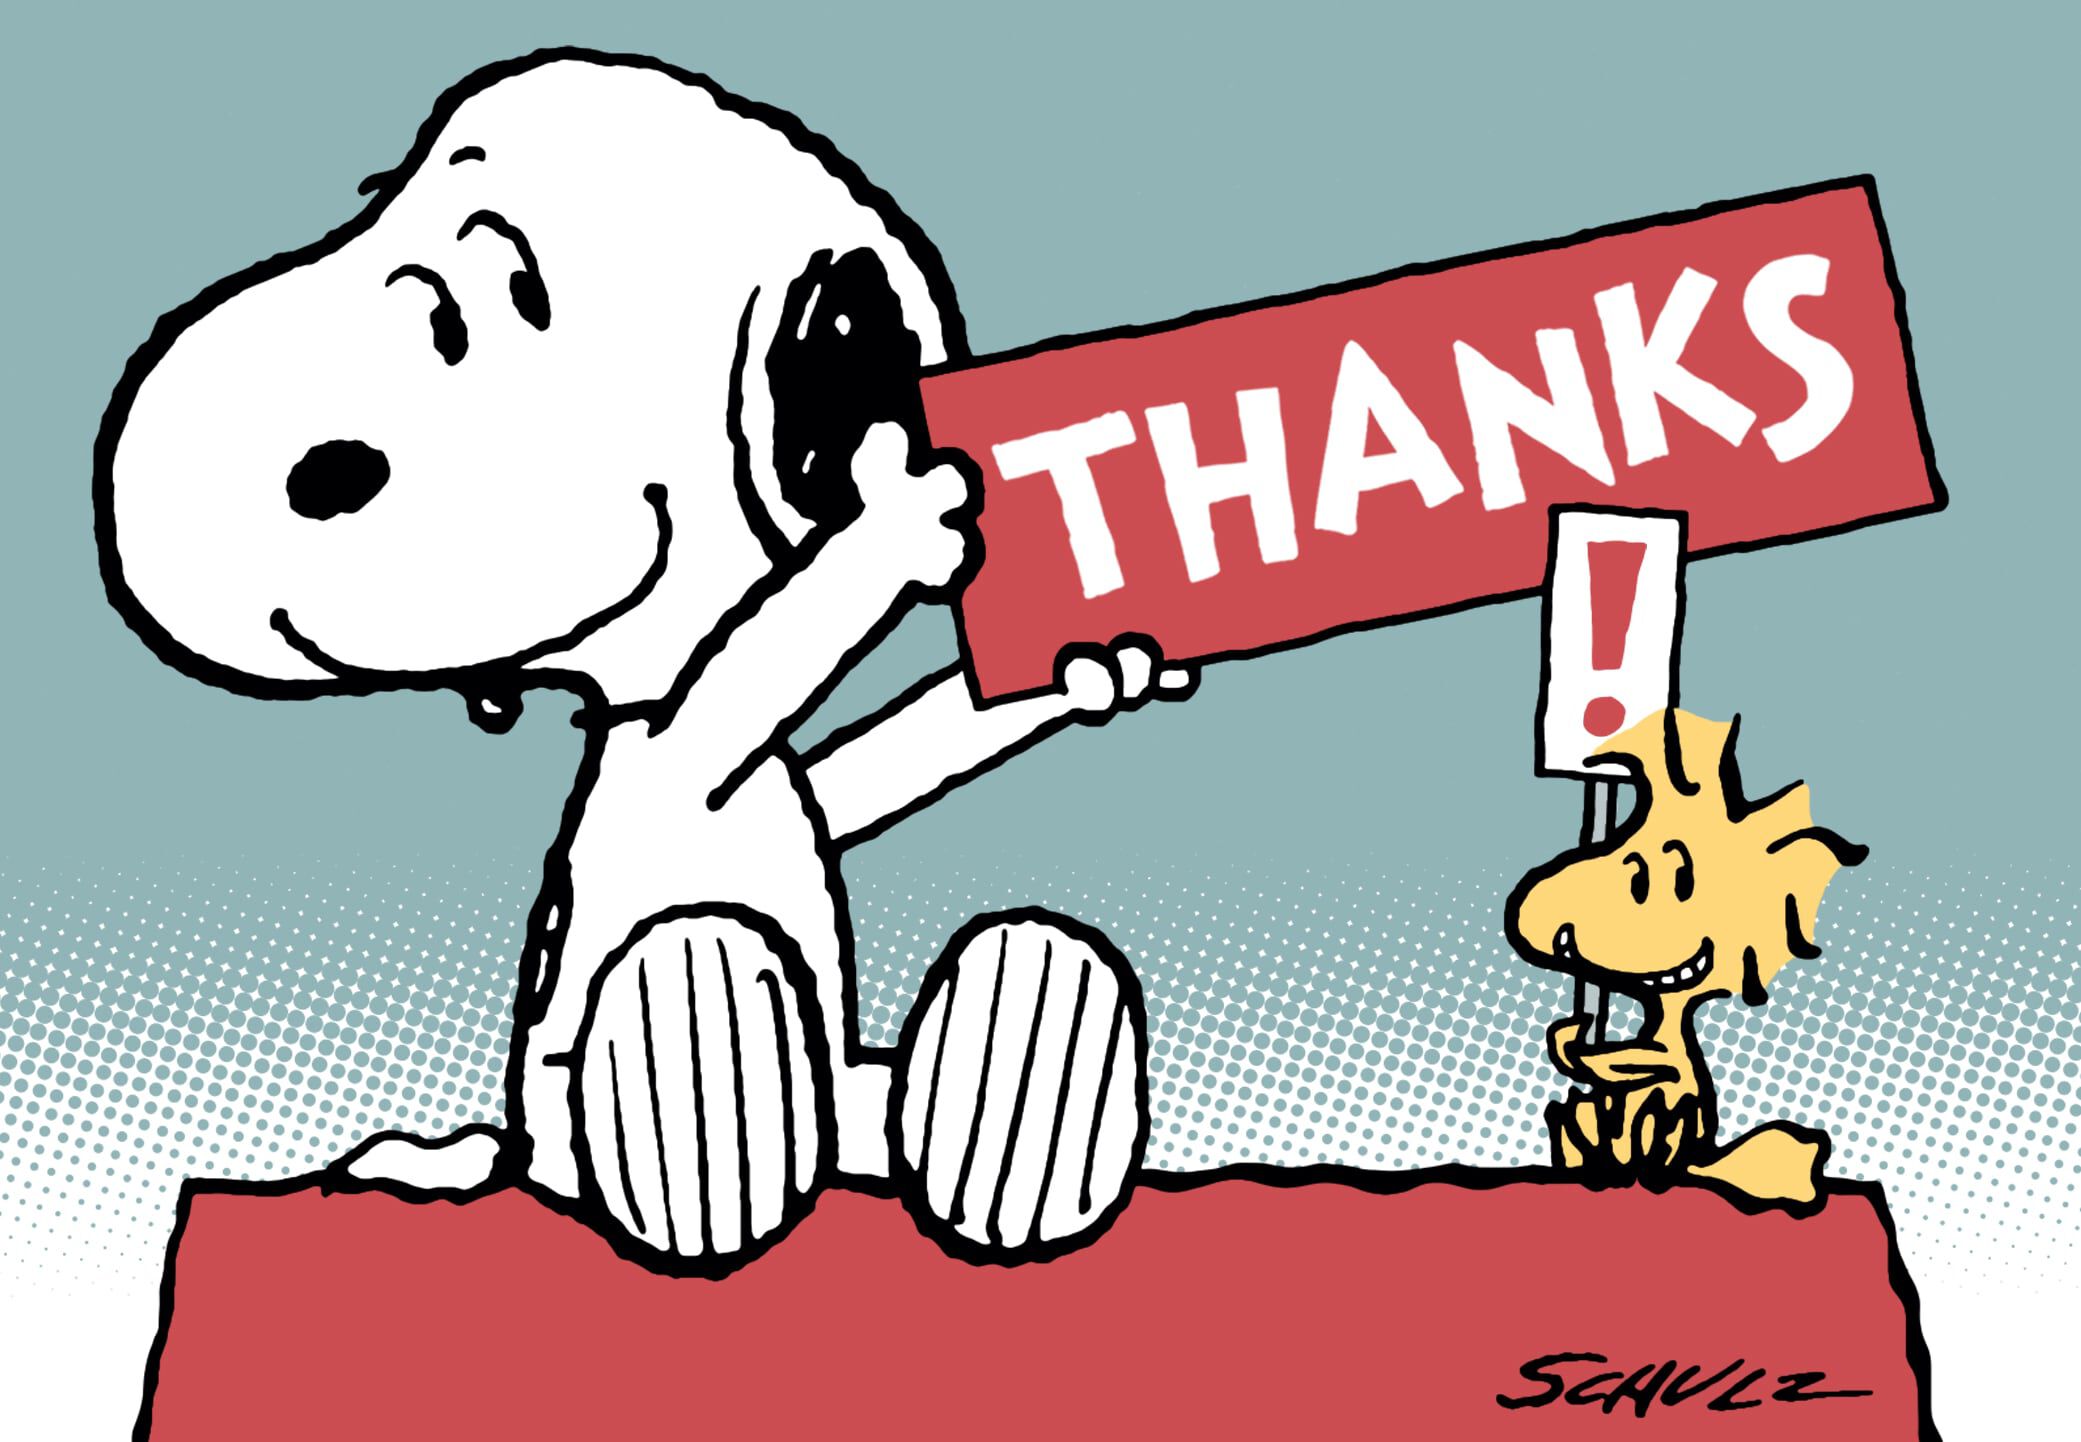 Unused Thank You Card Hallmark Snoopy with Big Thanks Schulz 